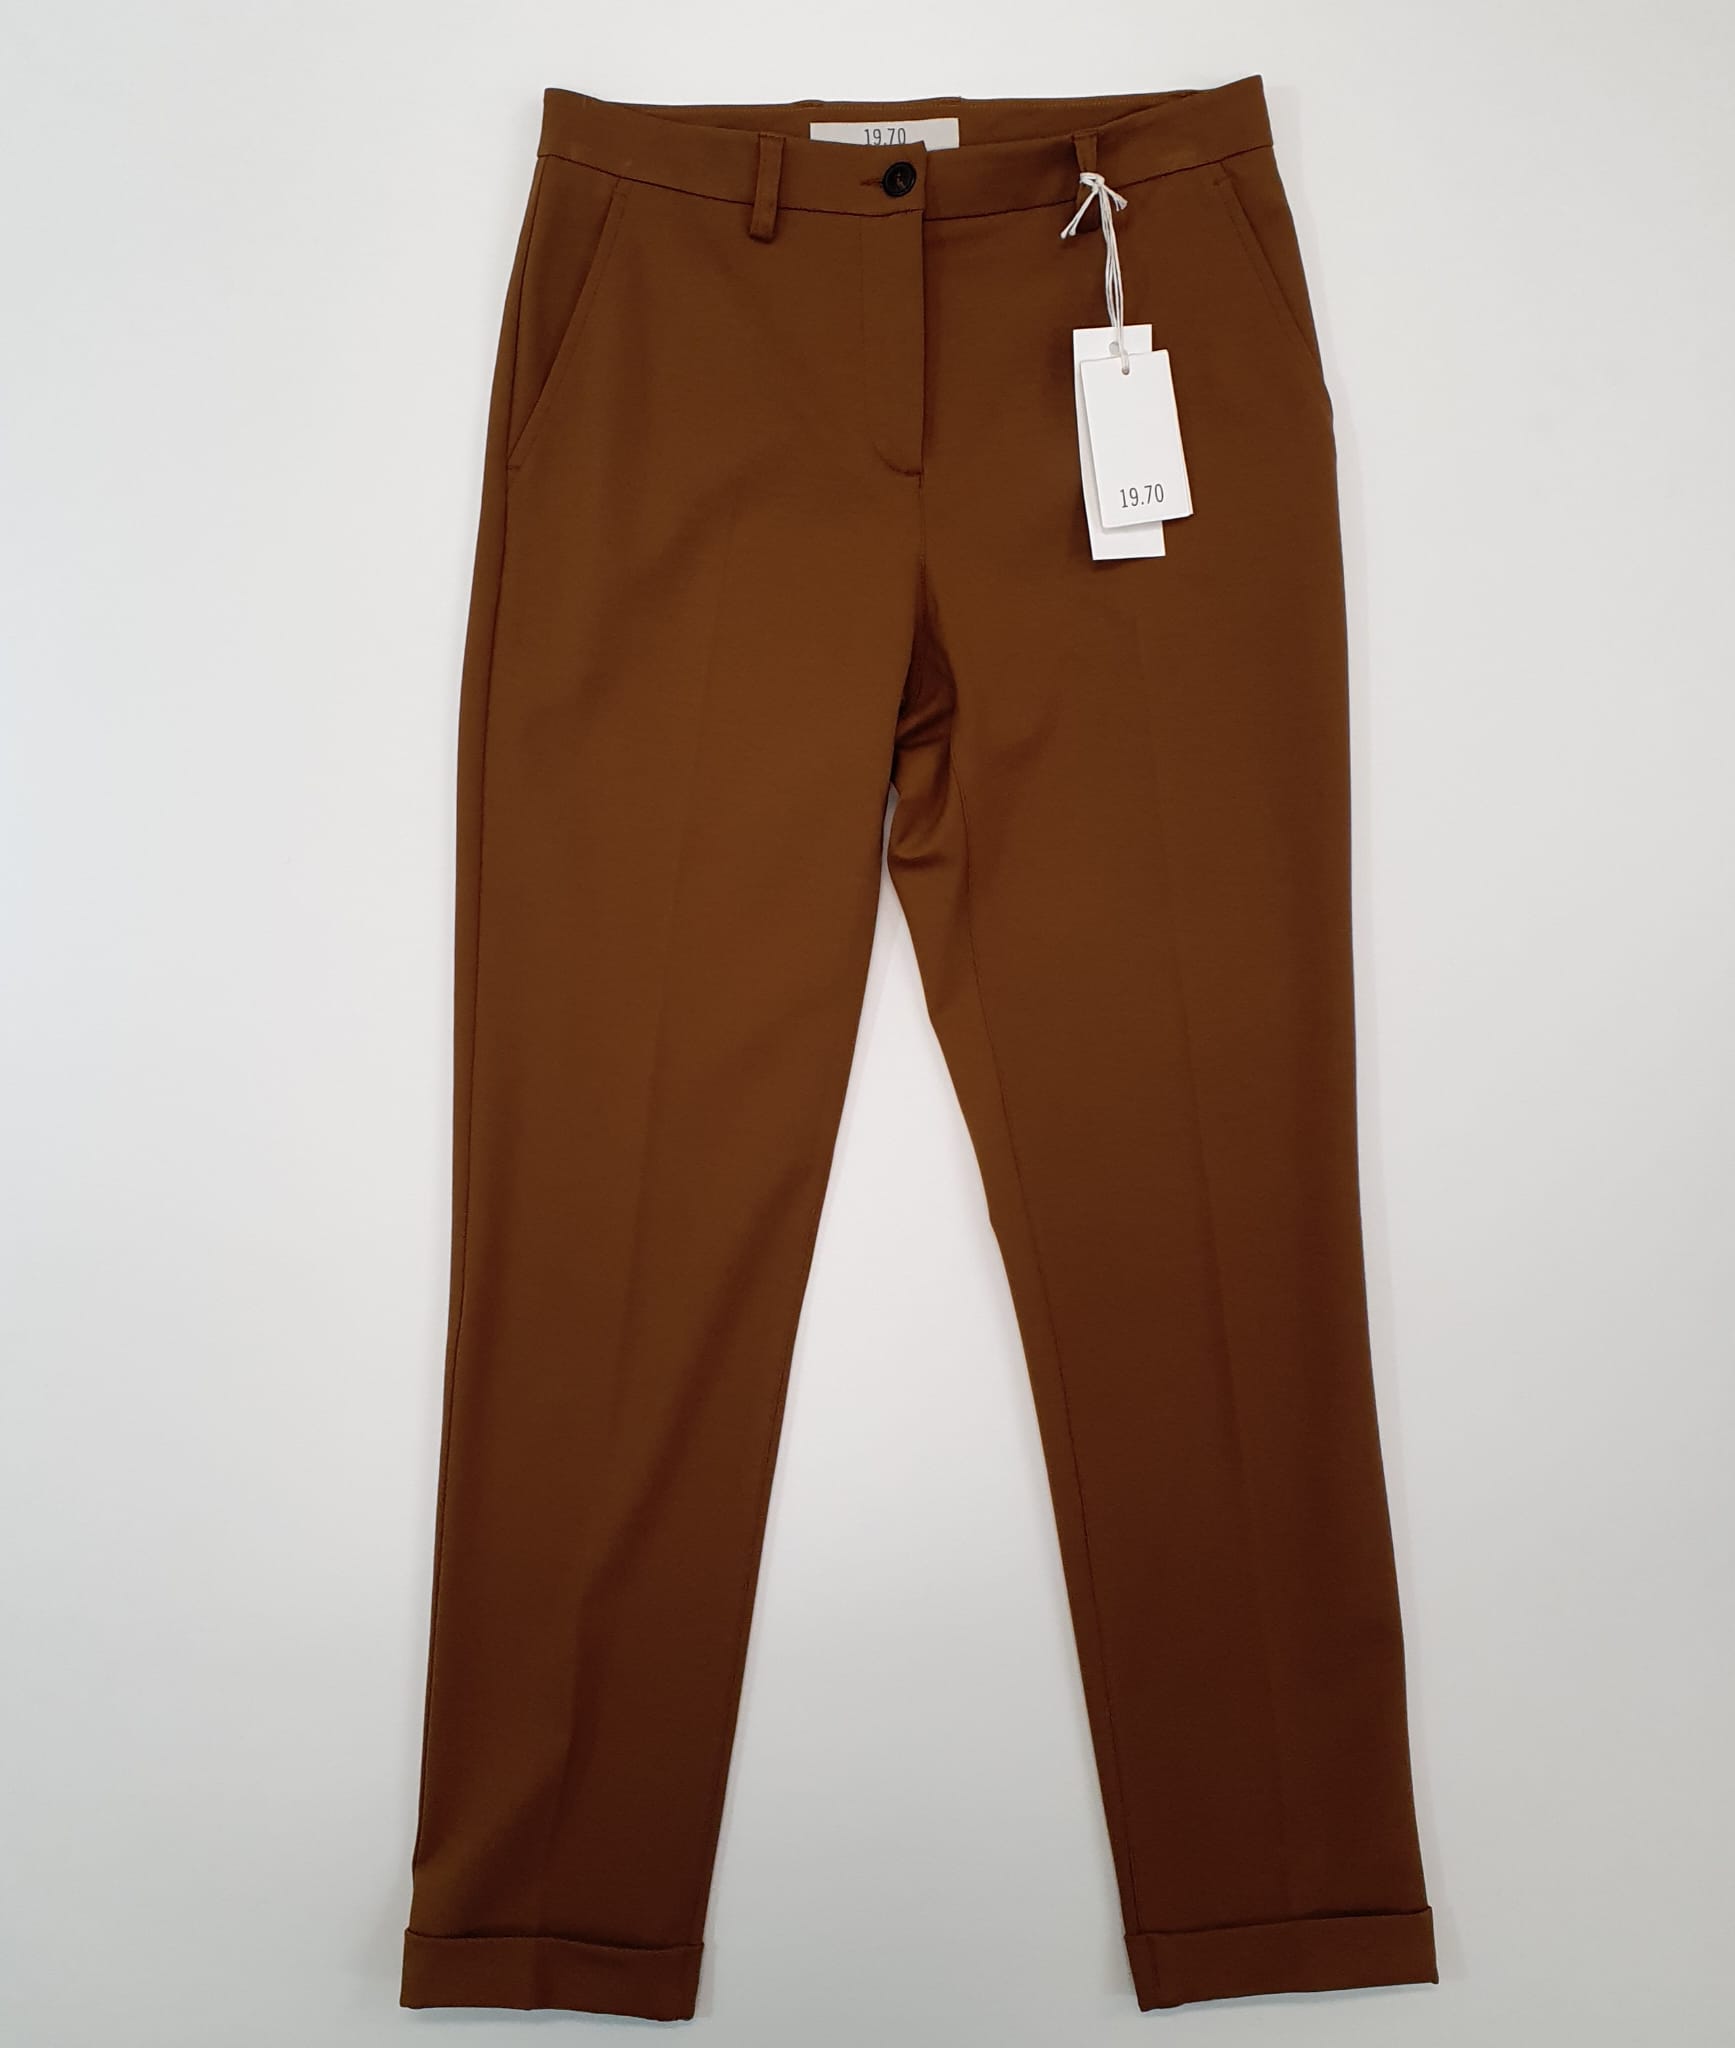 Pantalone 1970 punto stoffa Cammello